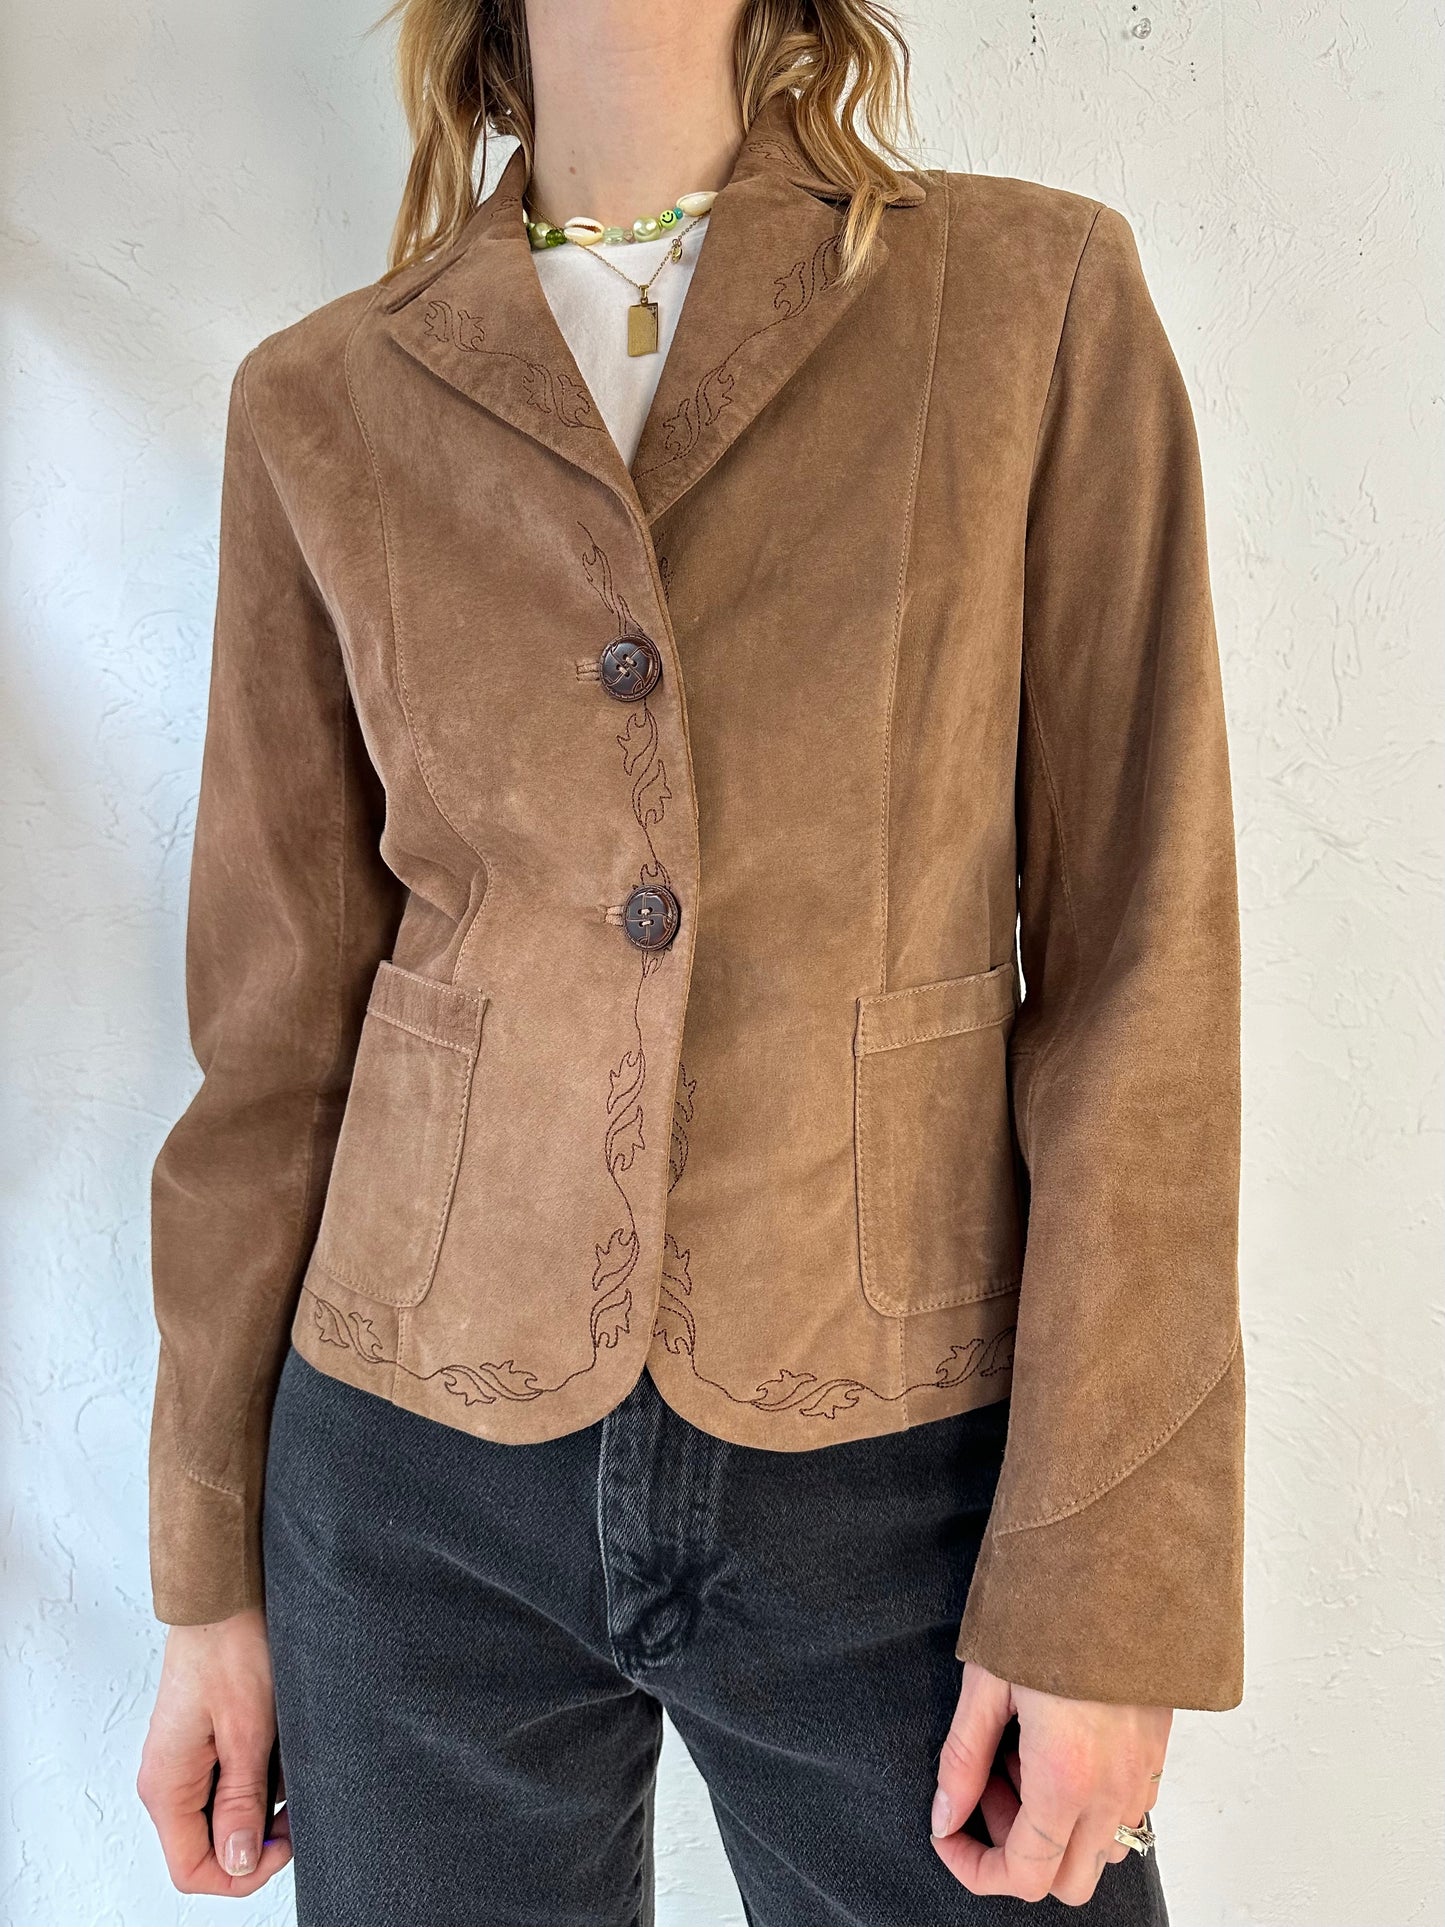 Y2k 'Nygard' Suede Leather Blazer Jacket / Small - Medium